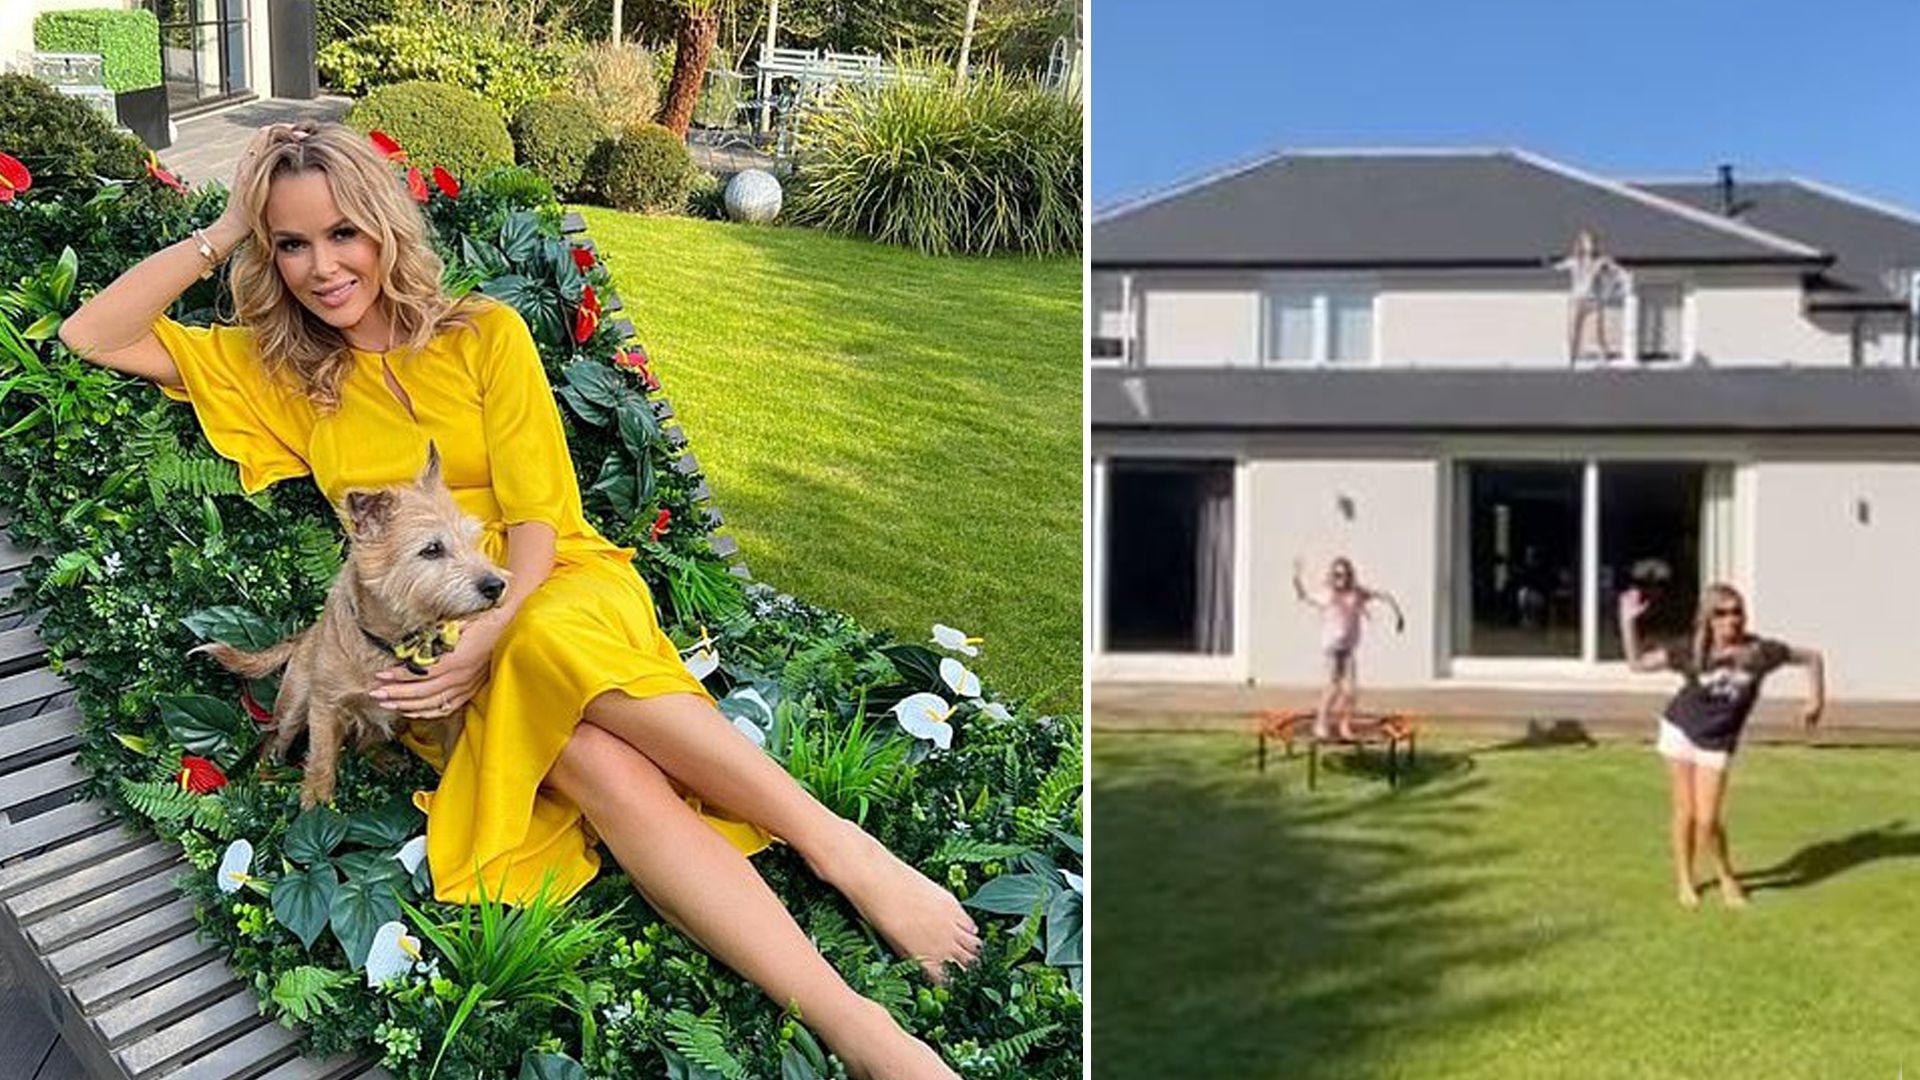 Amanda holden posing with dog in beautiful garden of surrey home